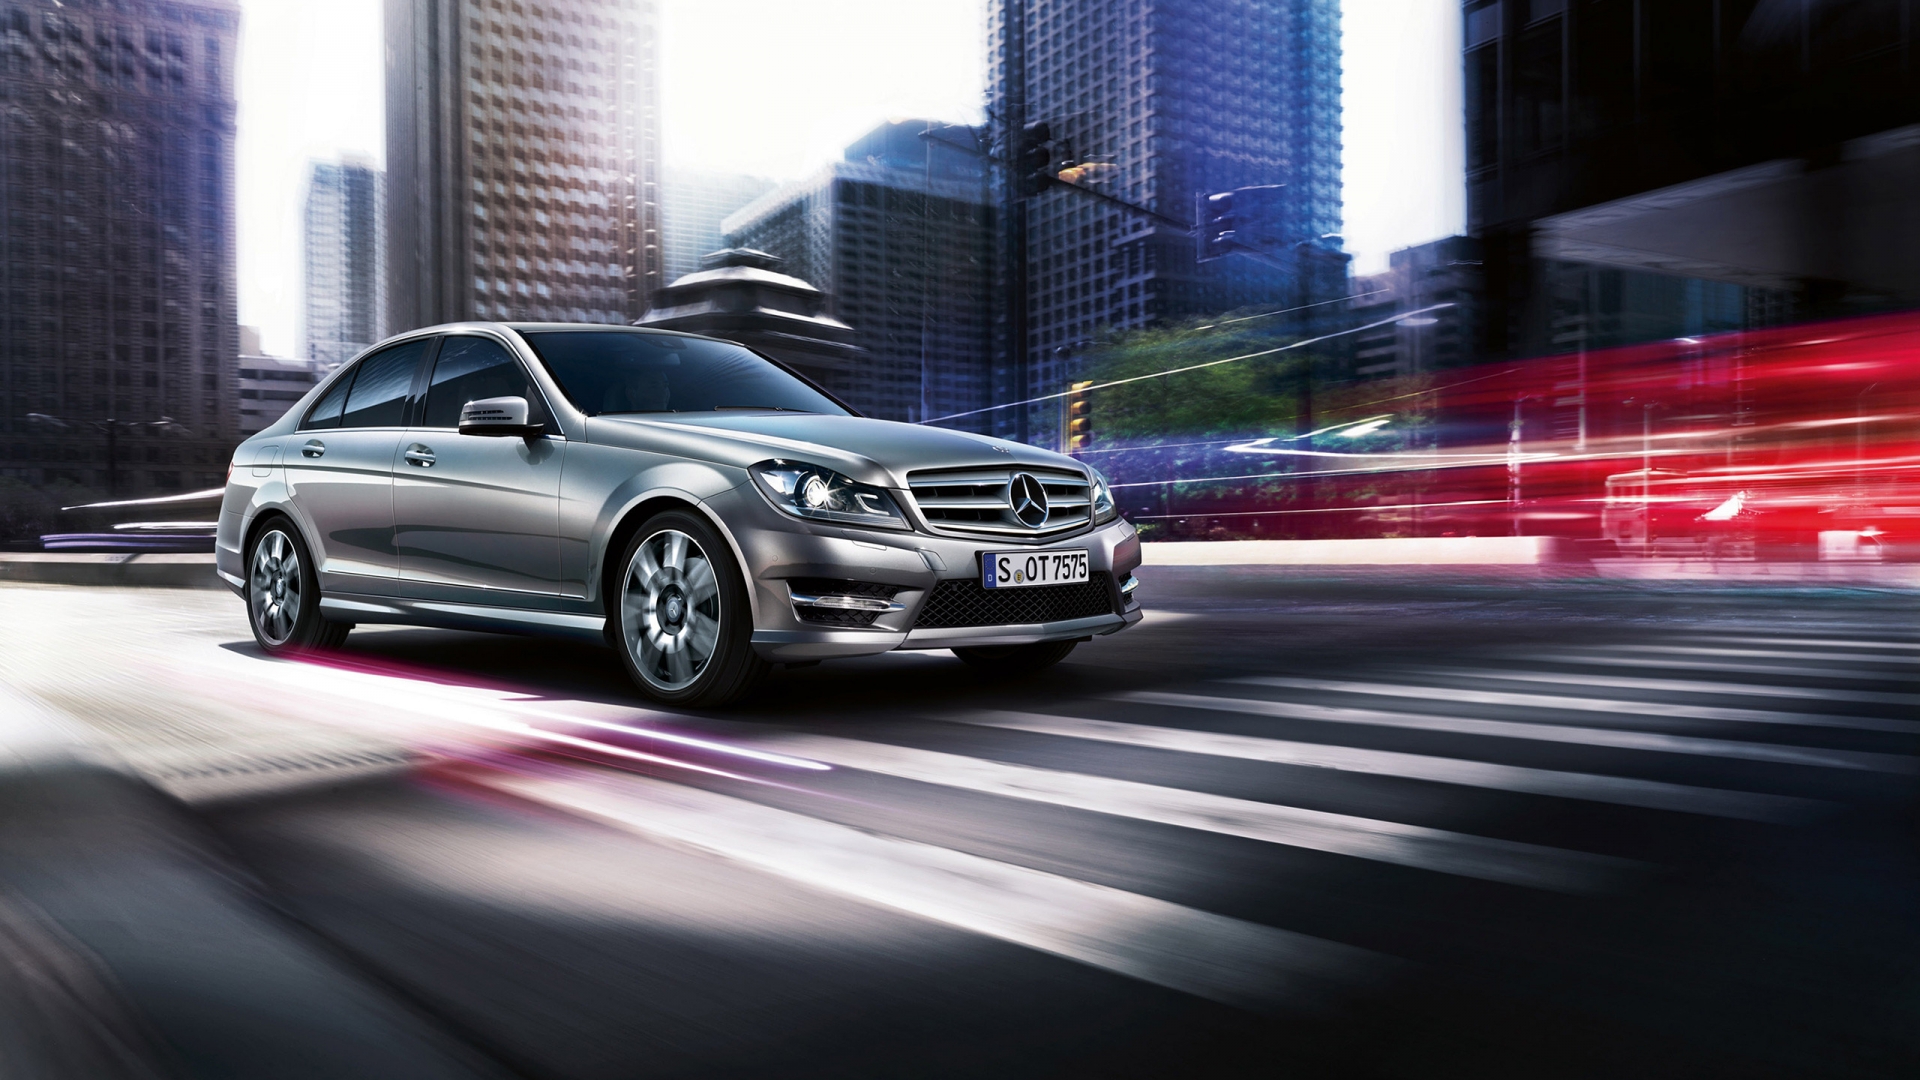 2013 Mercedes-Benz C Class for 1920 x 1080 HDTV 1080p resolution